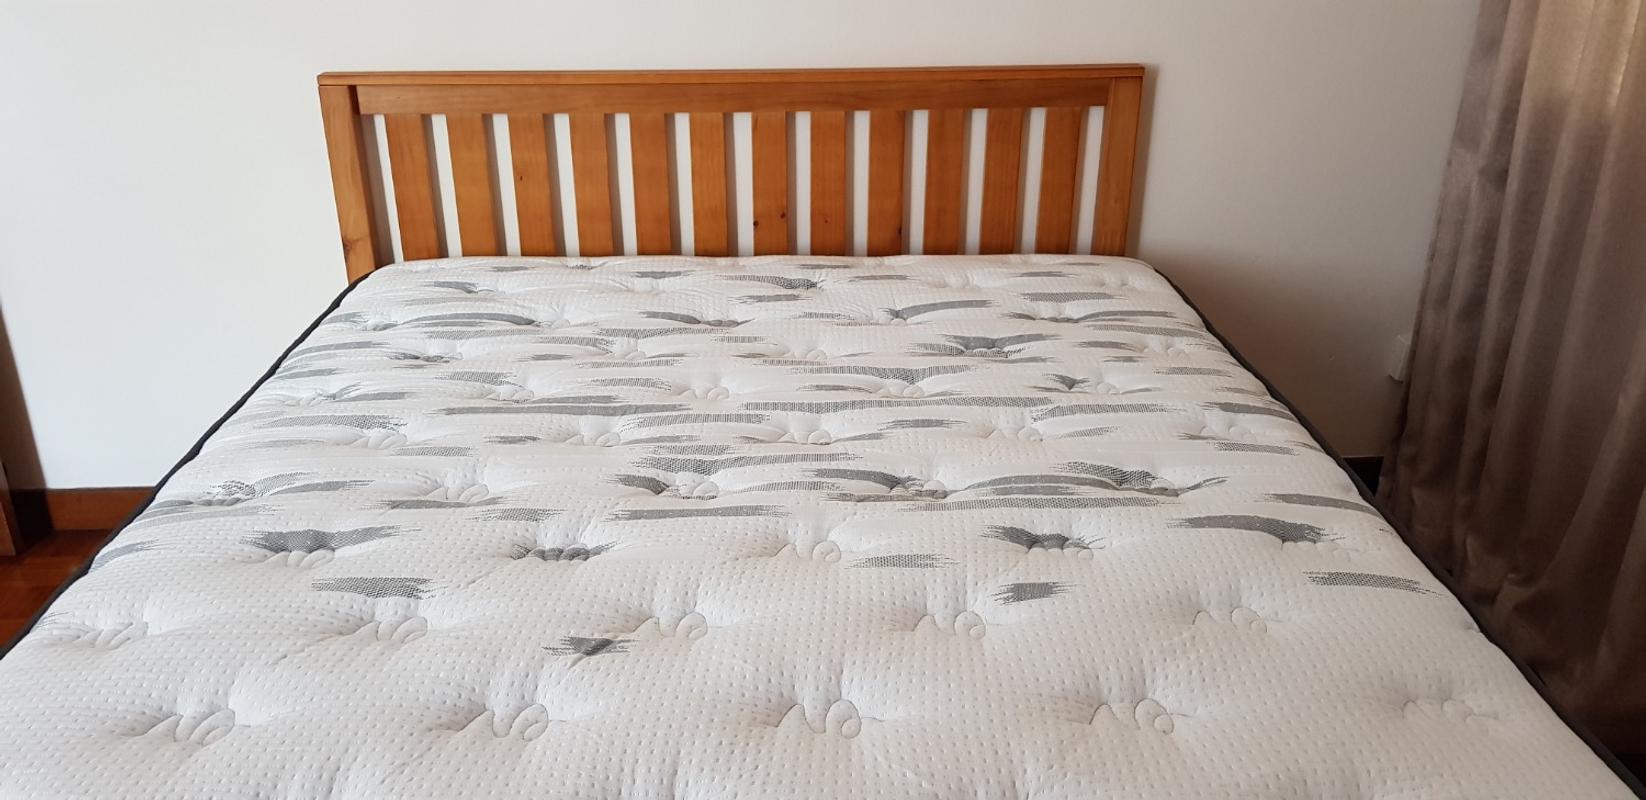 zinus mattress icoil 12 inch review